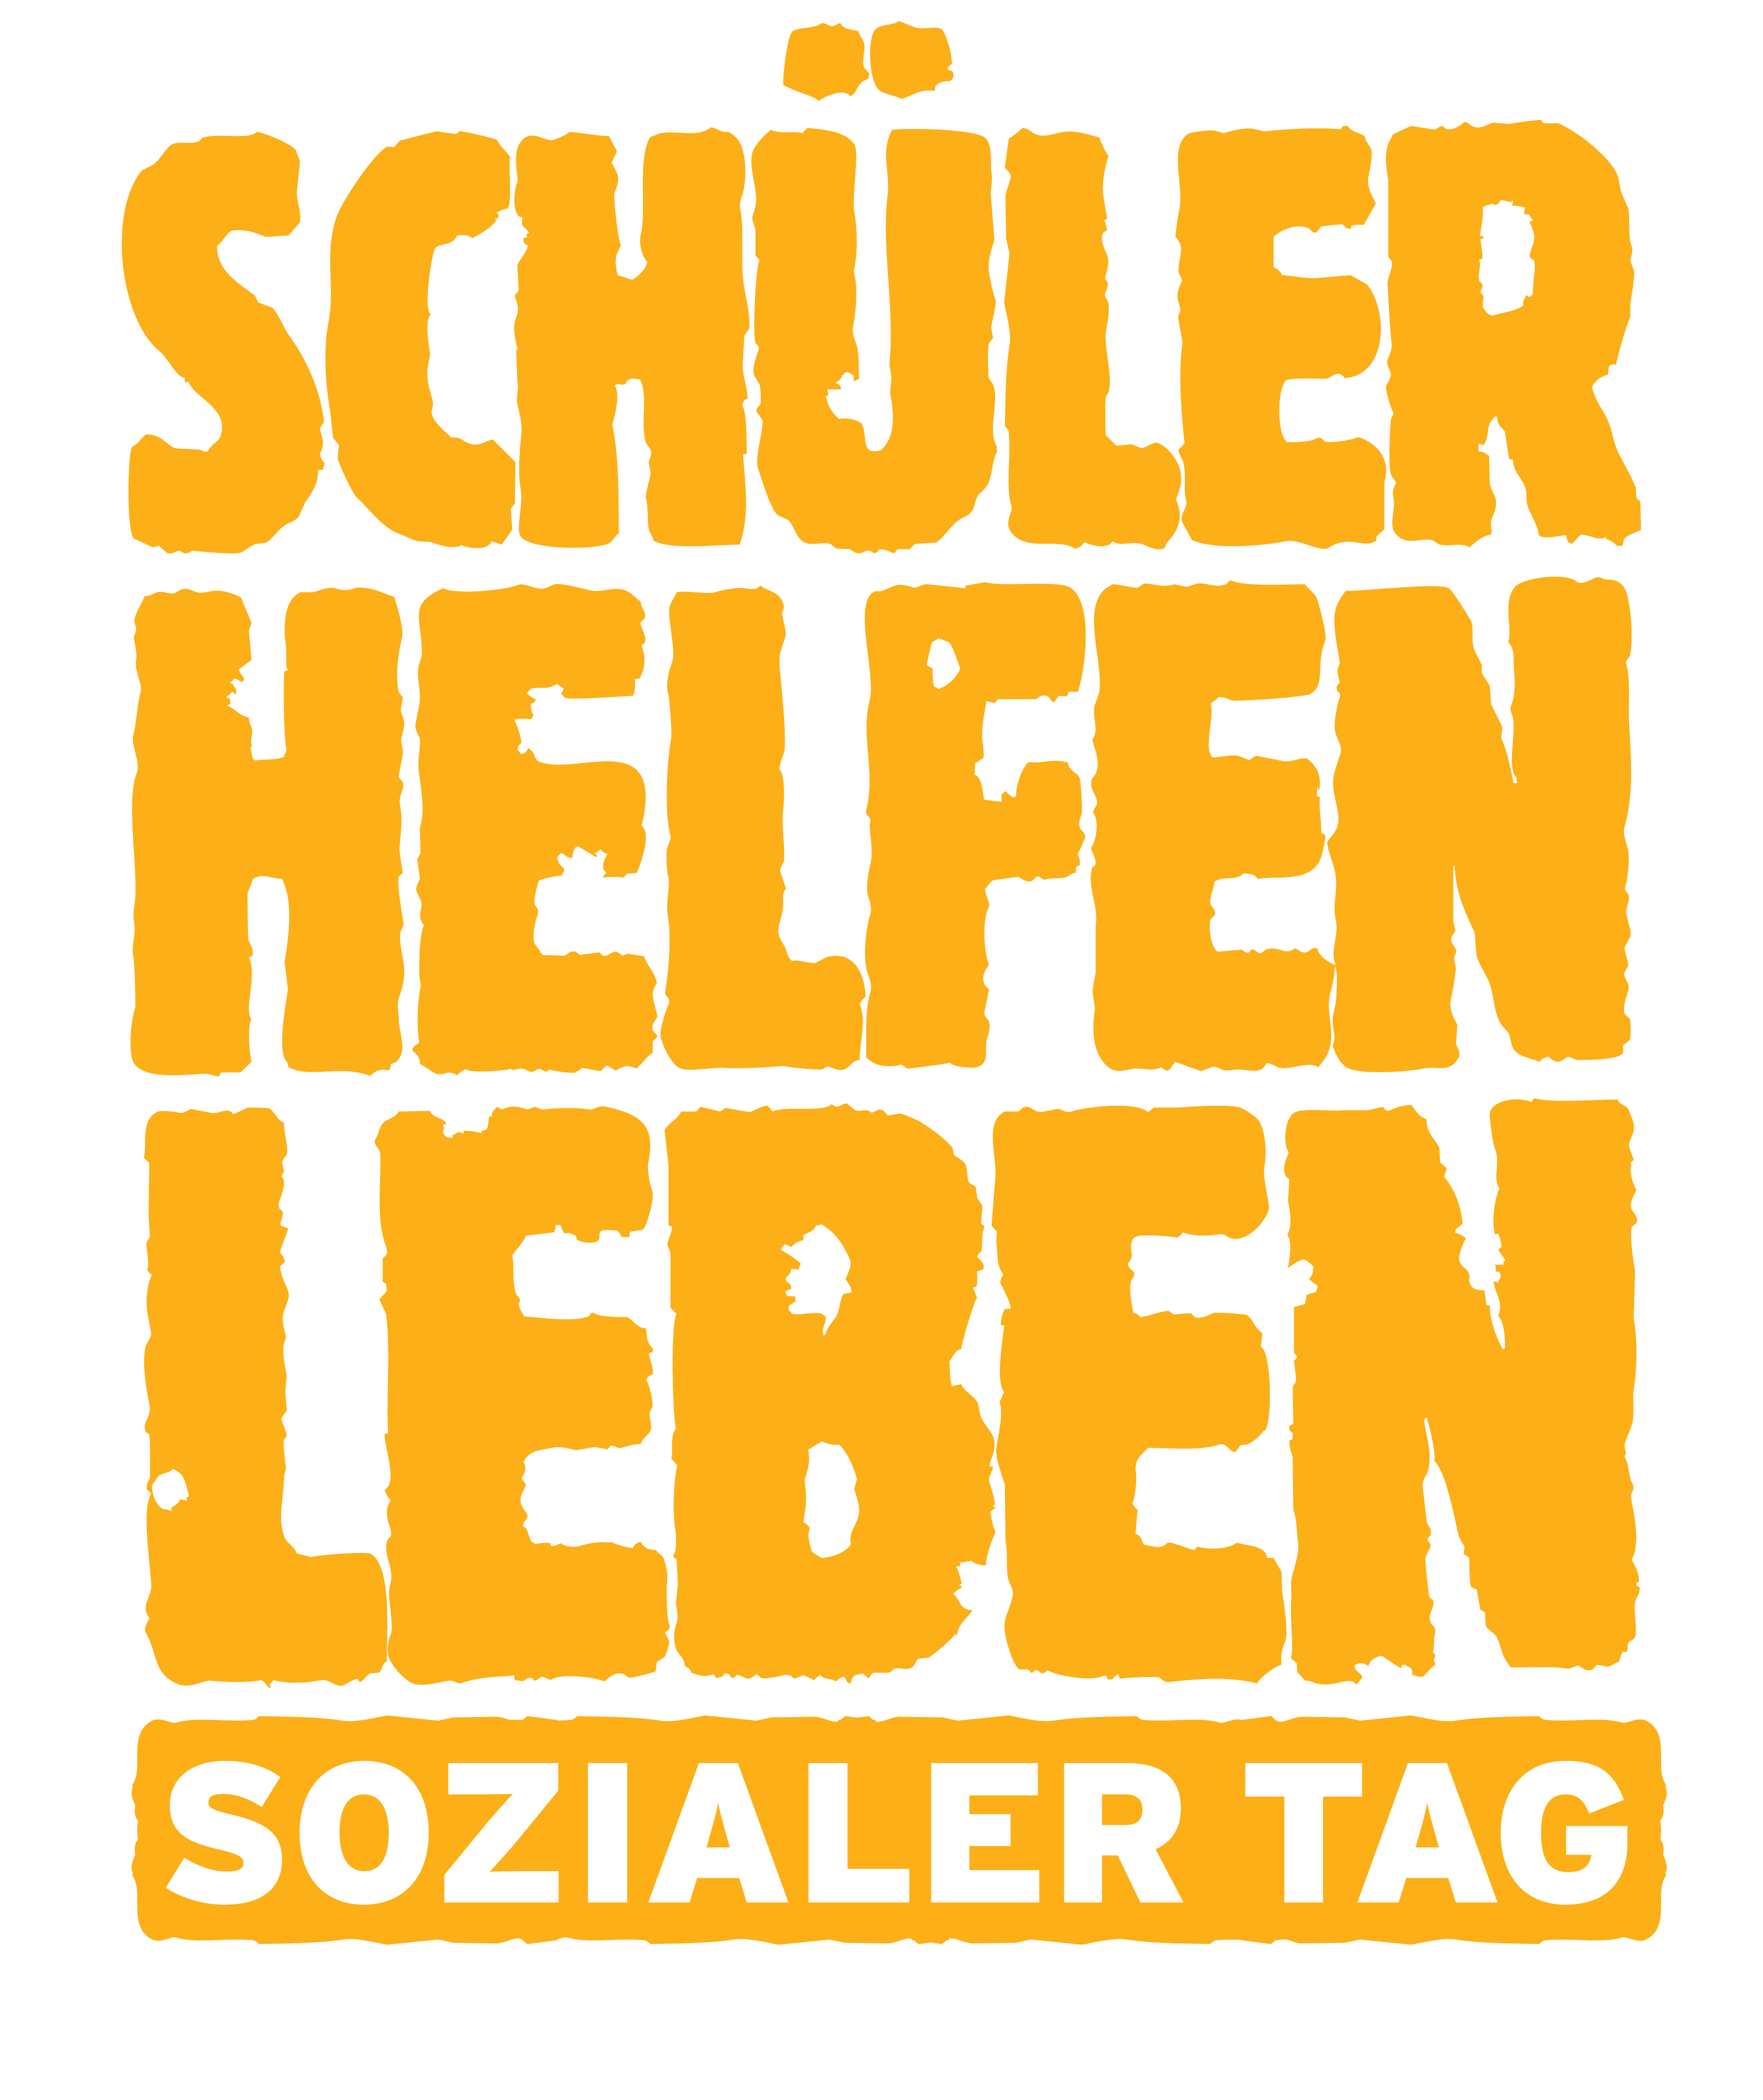 SHL-Logo_Sozialer_Tag_CMYK_RZ-ORANGE